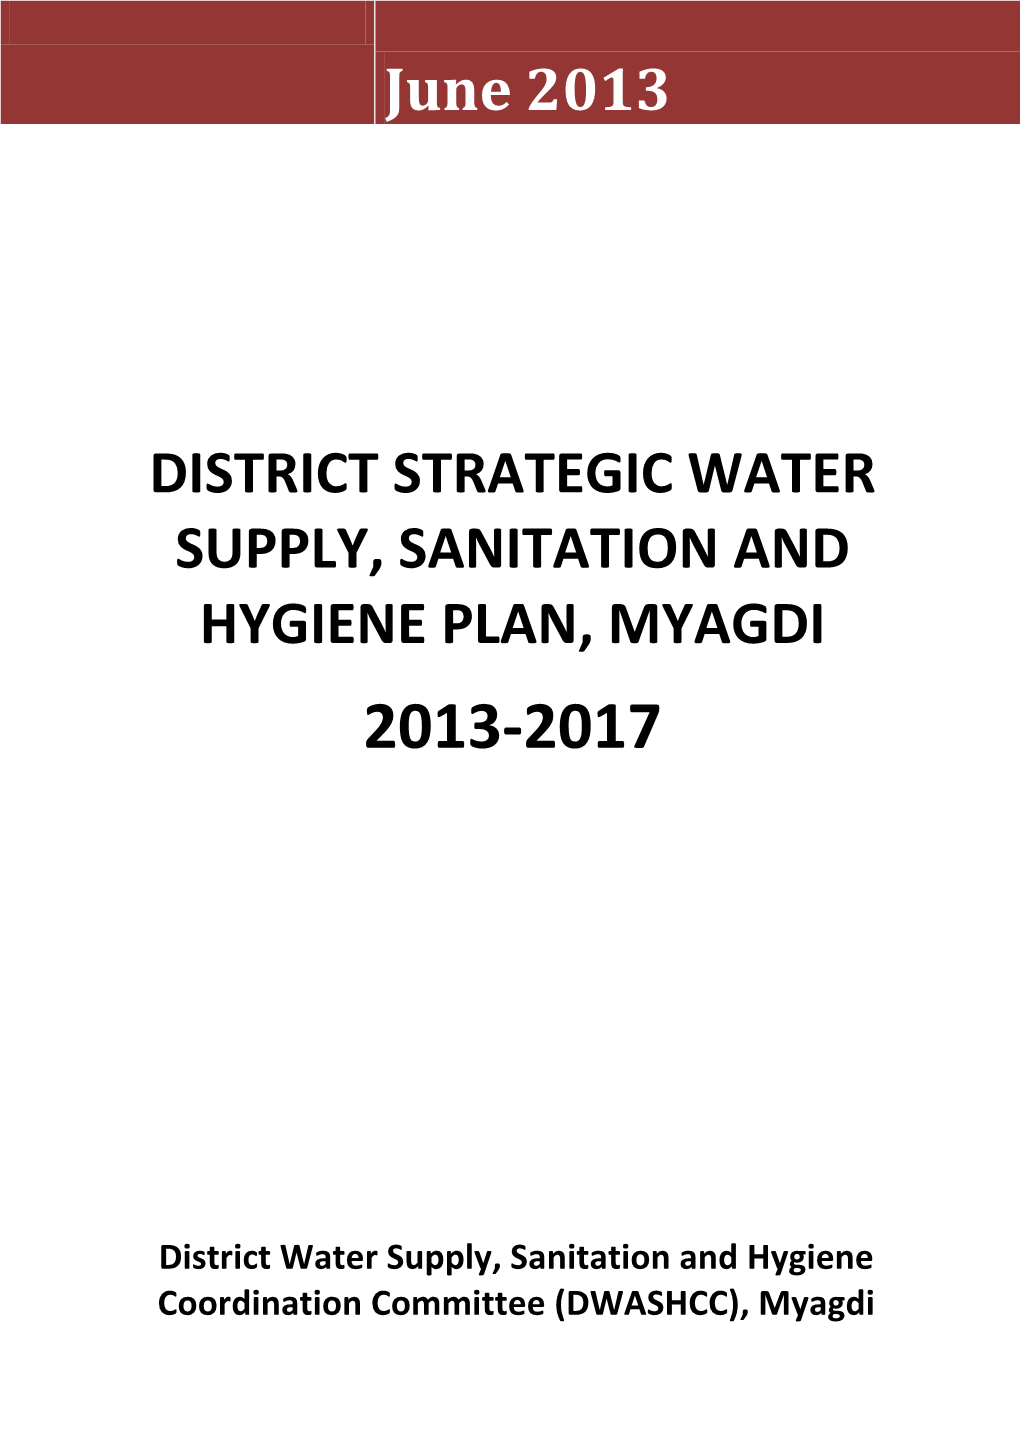 District Strategic Water Supply, Sanitation and Hygiene Plan, Myagdi